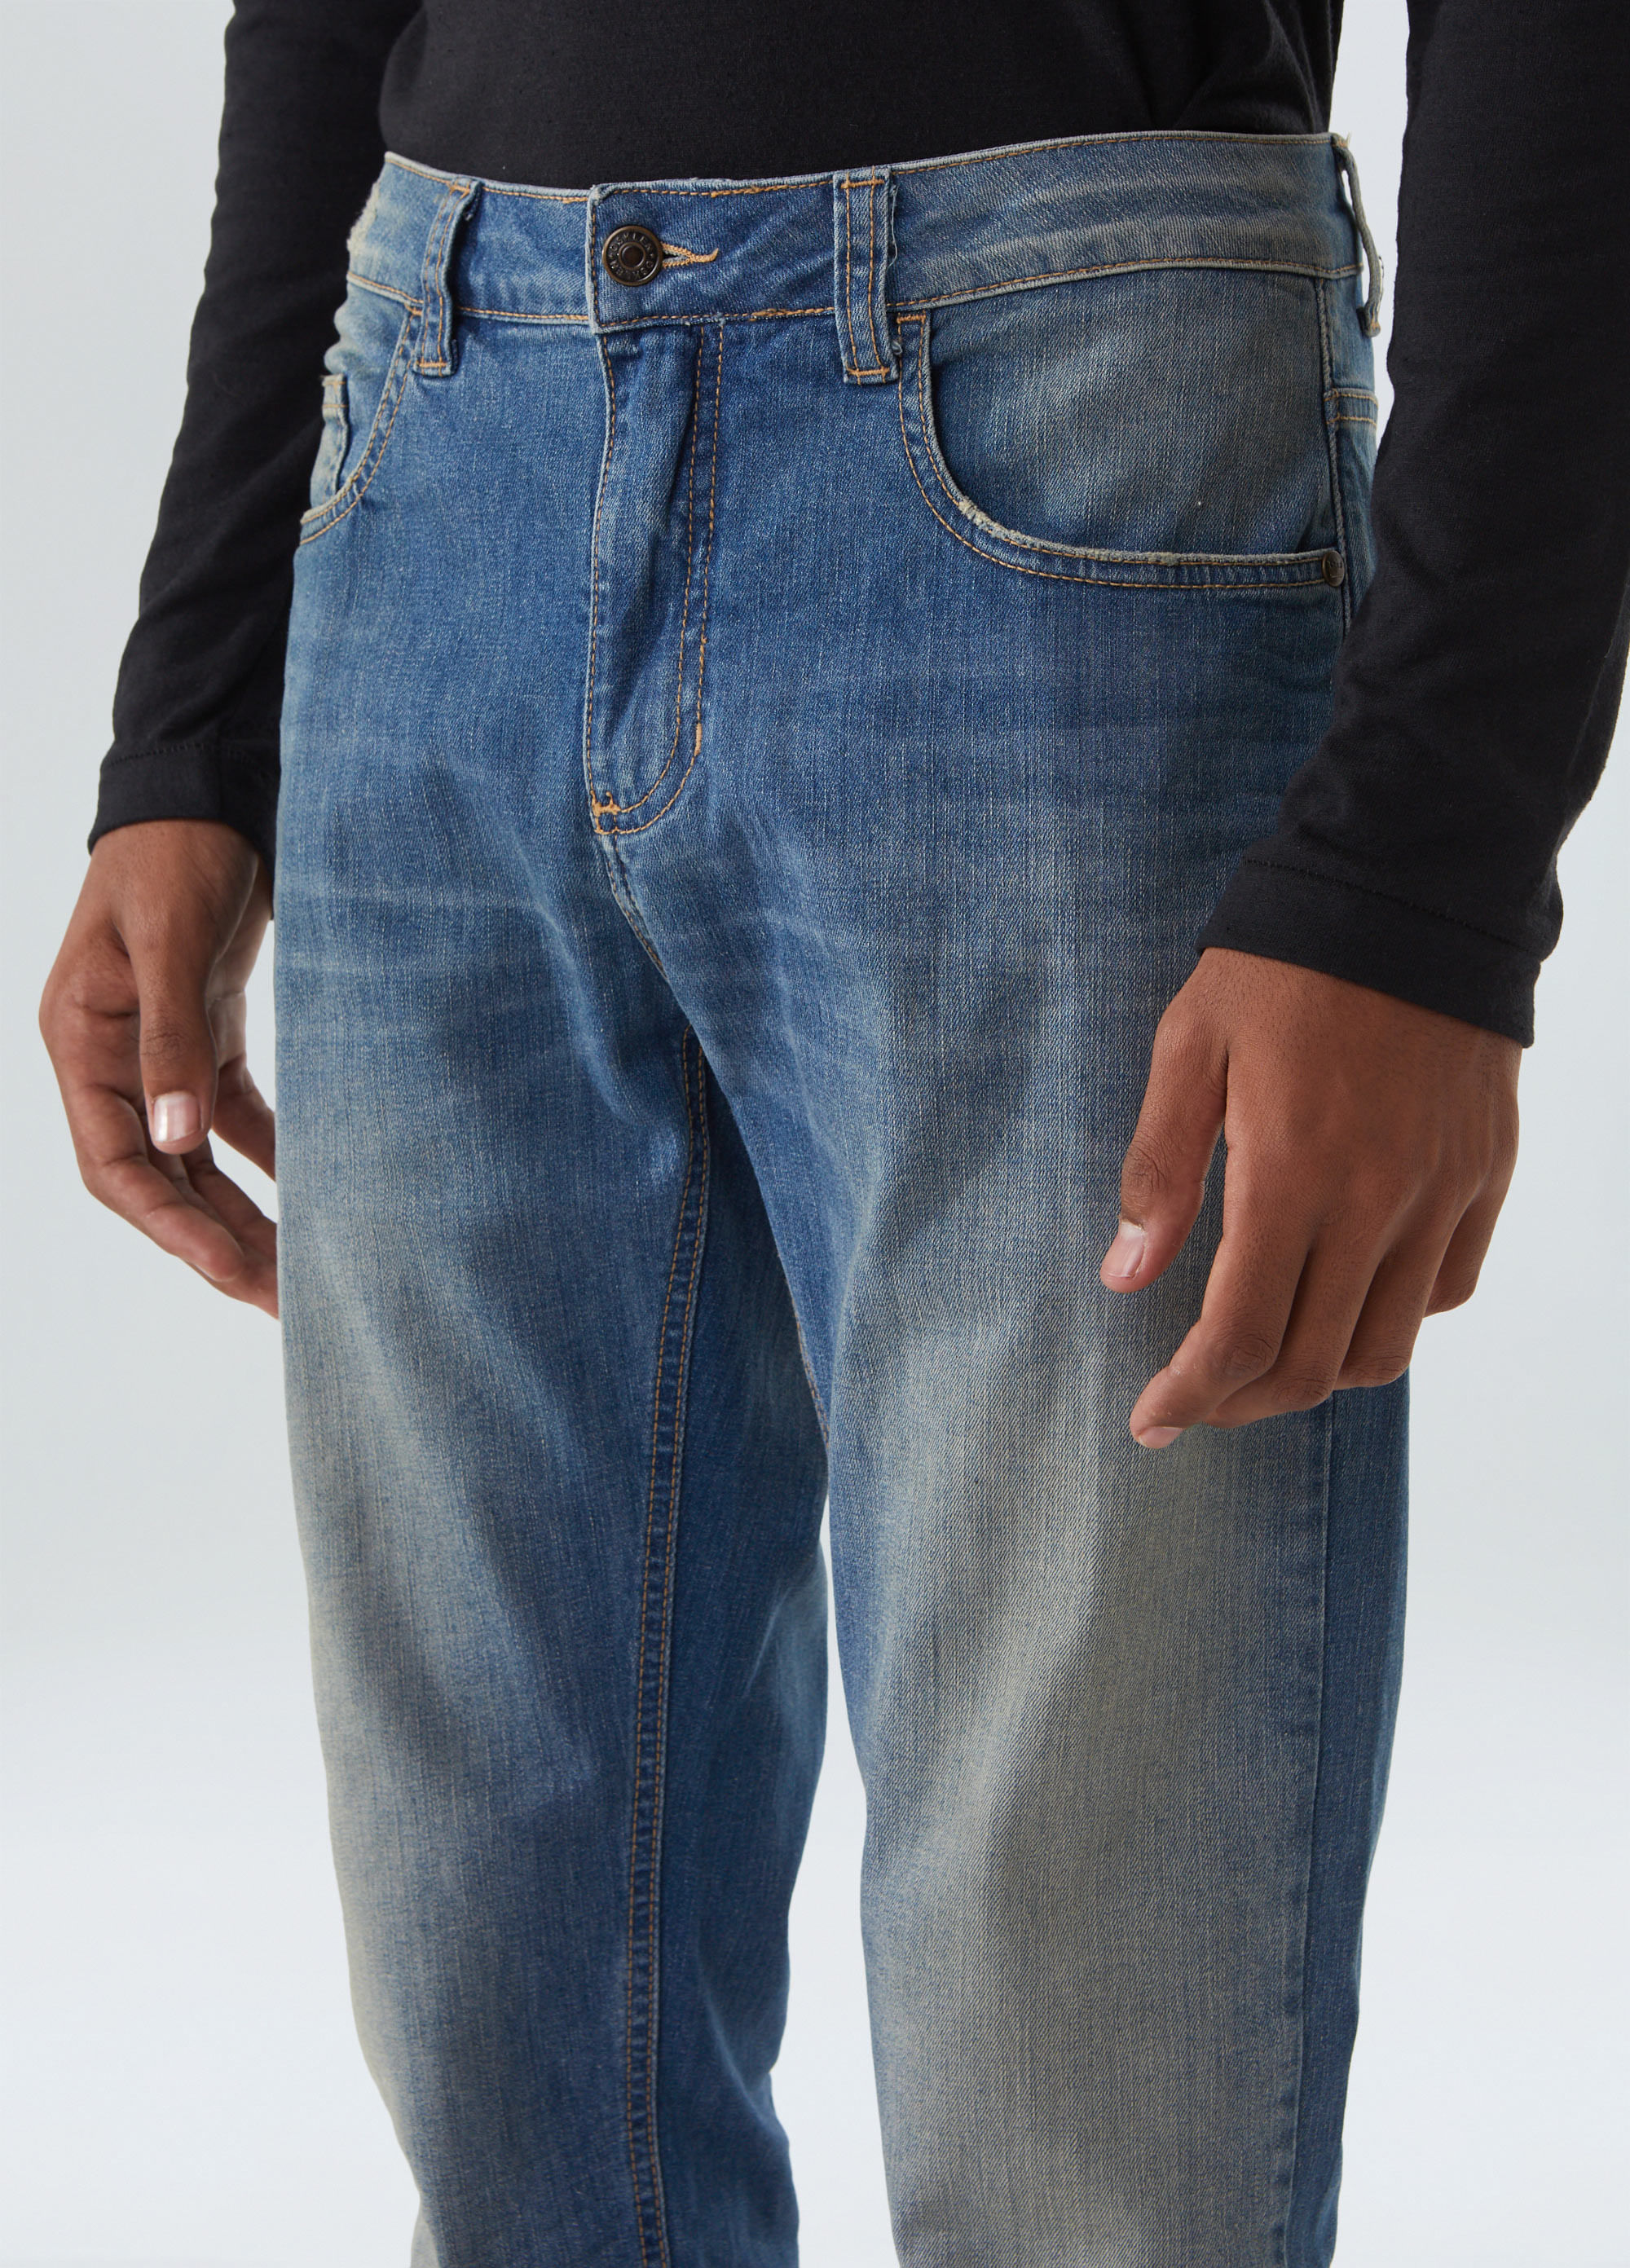 calca jeans joatinga used